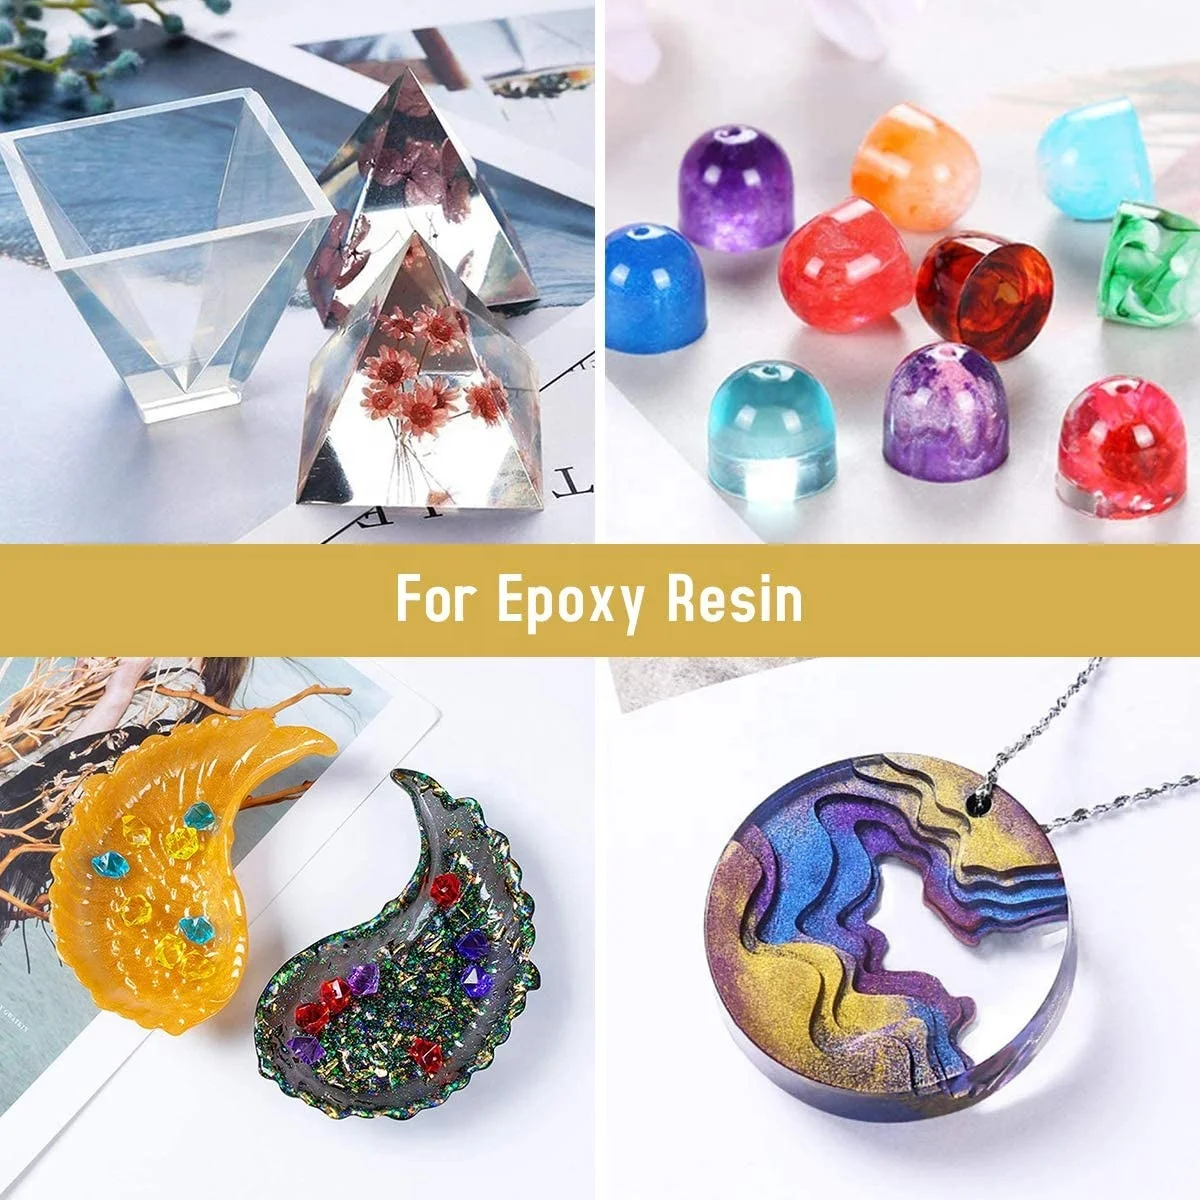 24 Colors Epoxy Resin Pigment Liquid Colorant DIY Resin Dye Art